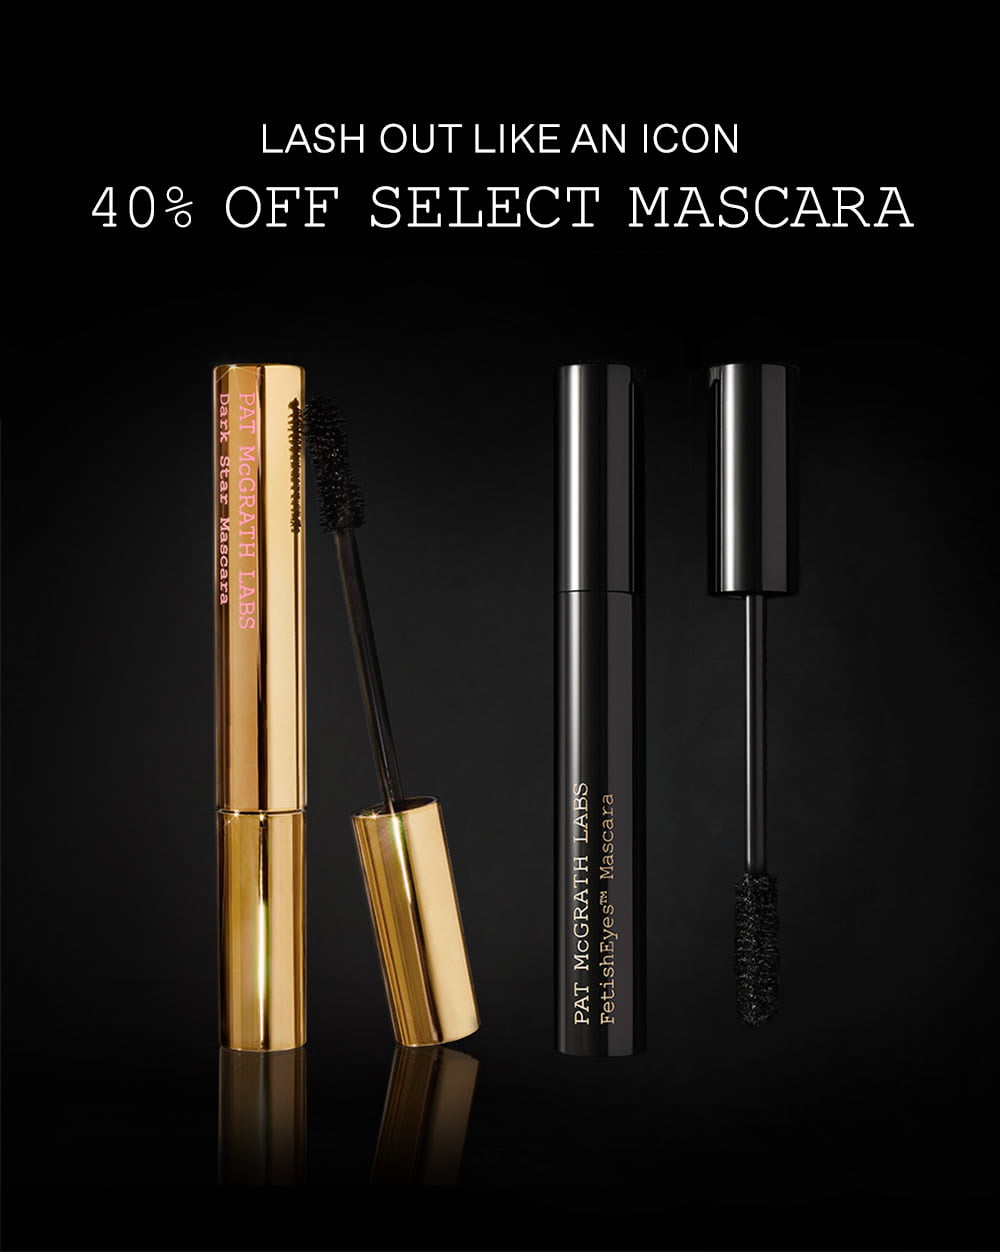 40% off select Mascara at Pat McGrath